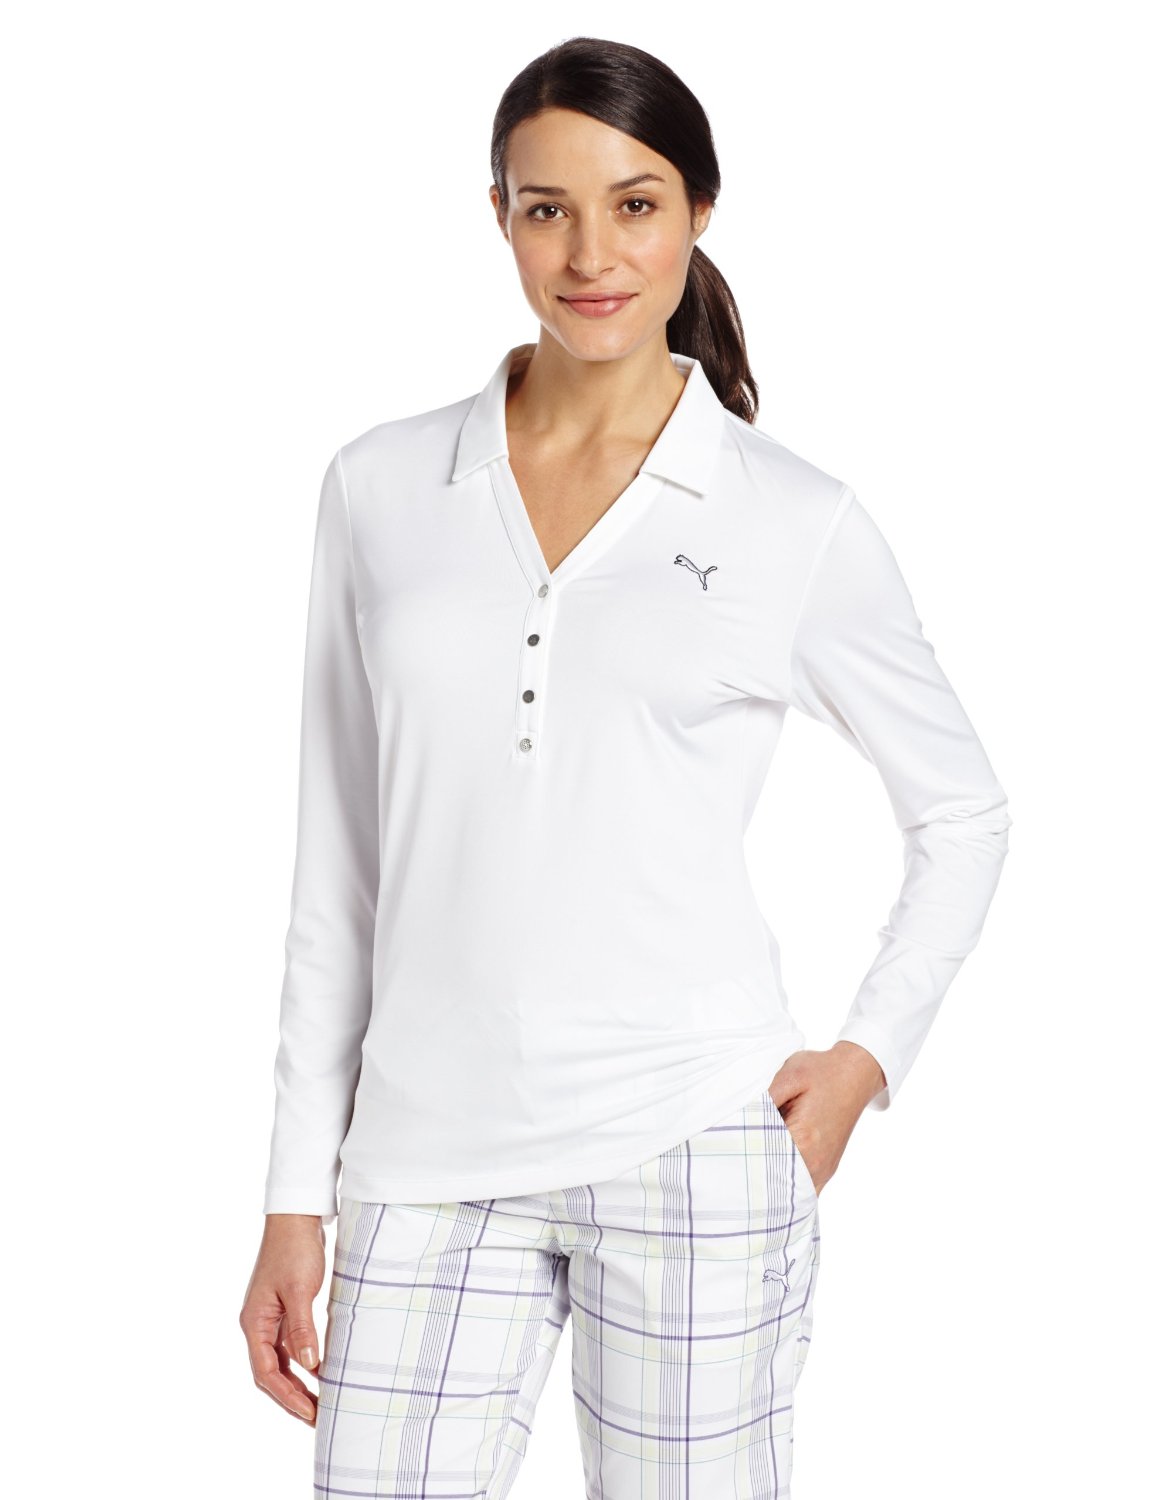 Womens NA Long Sleeve Golf Polo Shirts